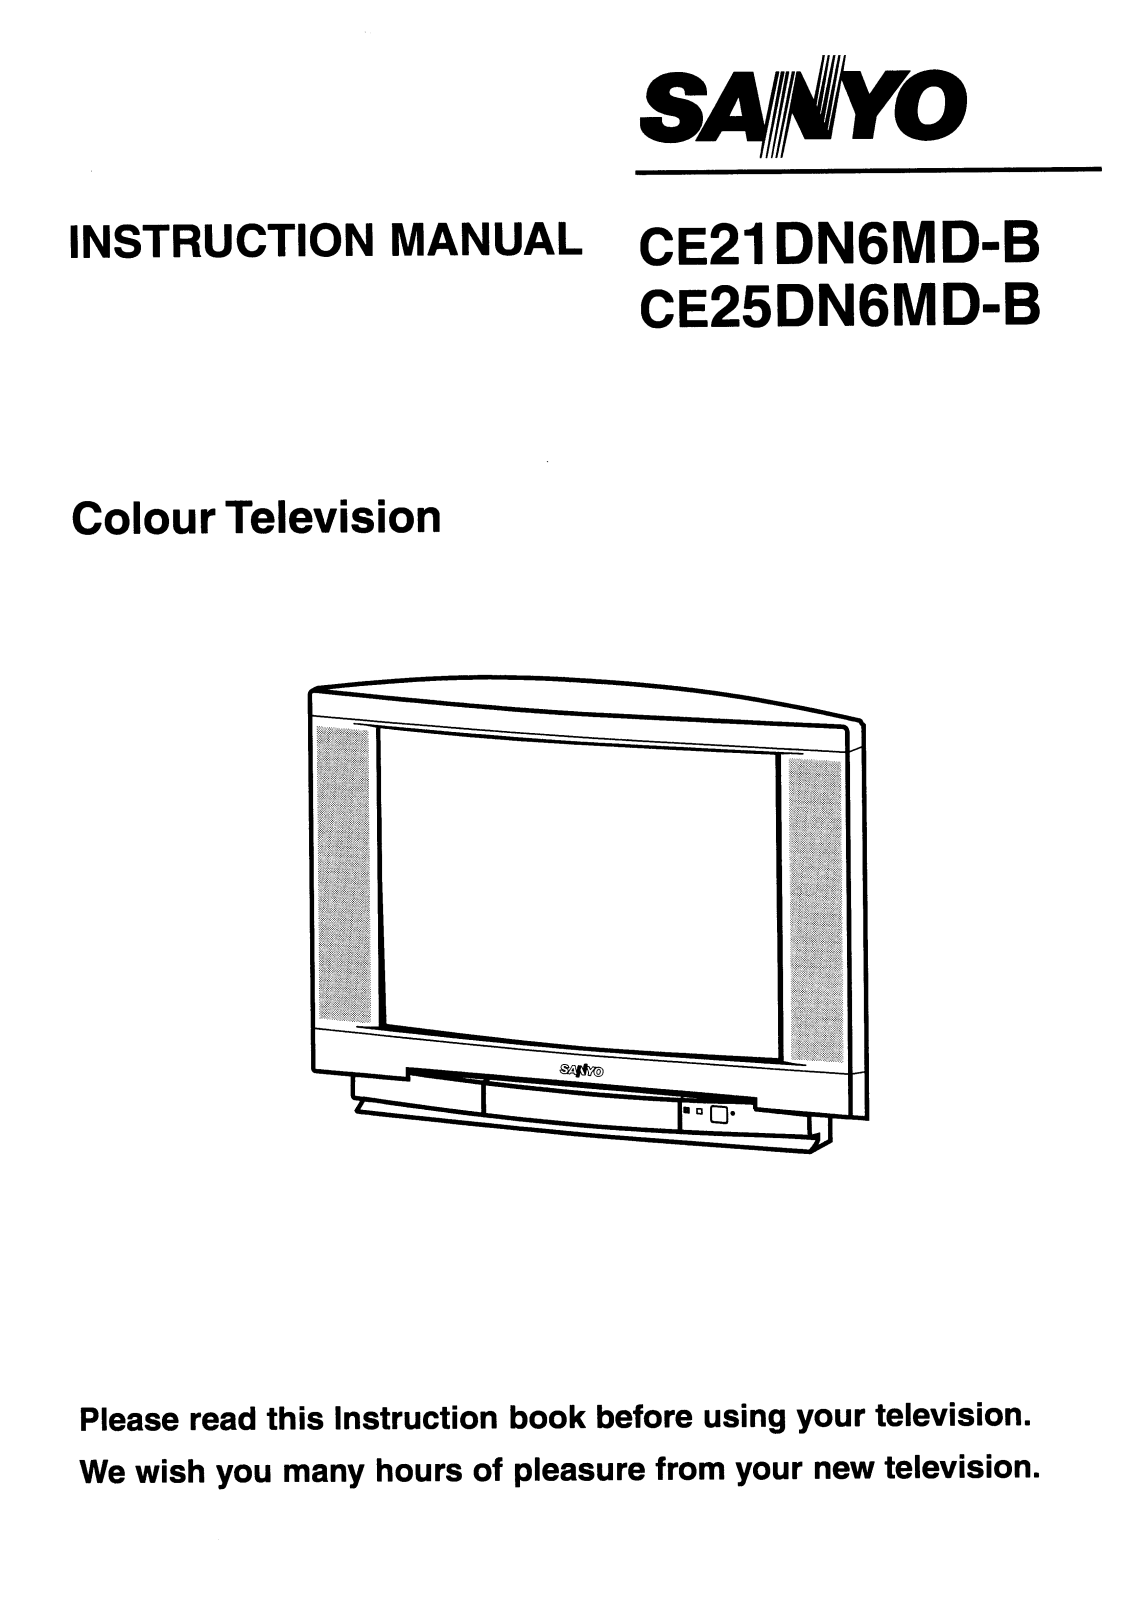 Sanyo CE21DN6MD-B, CE25DN6MD-B Instruction Manual